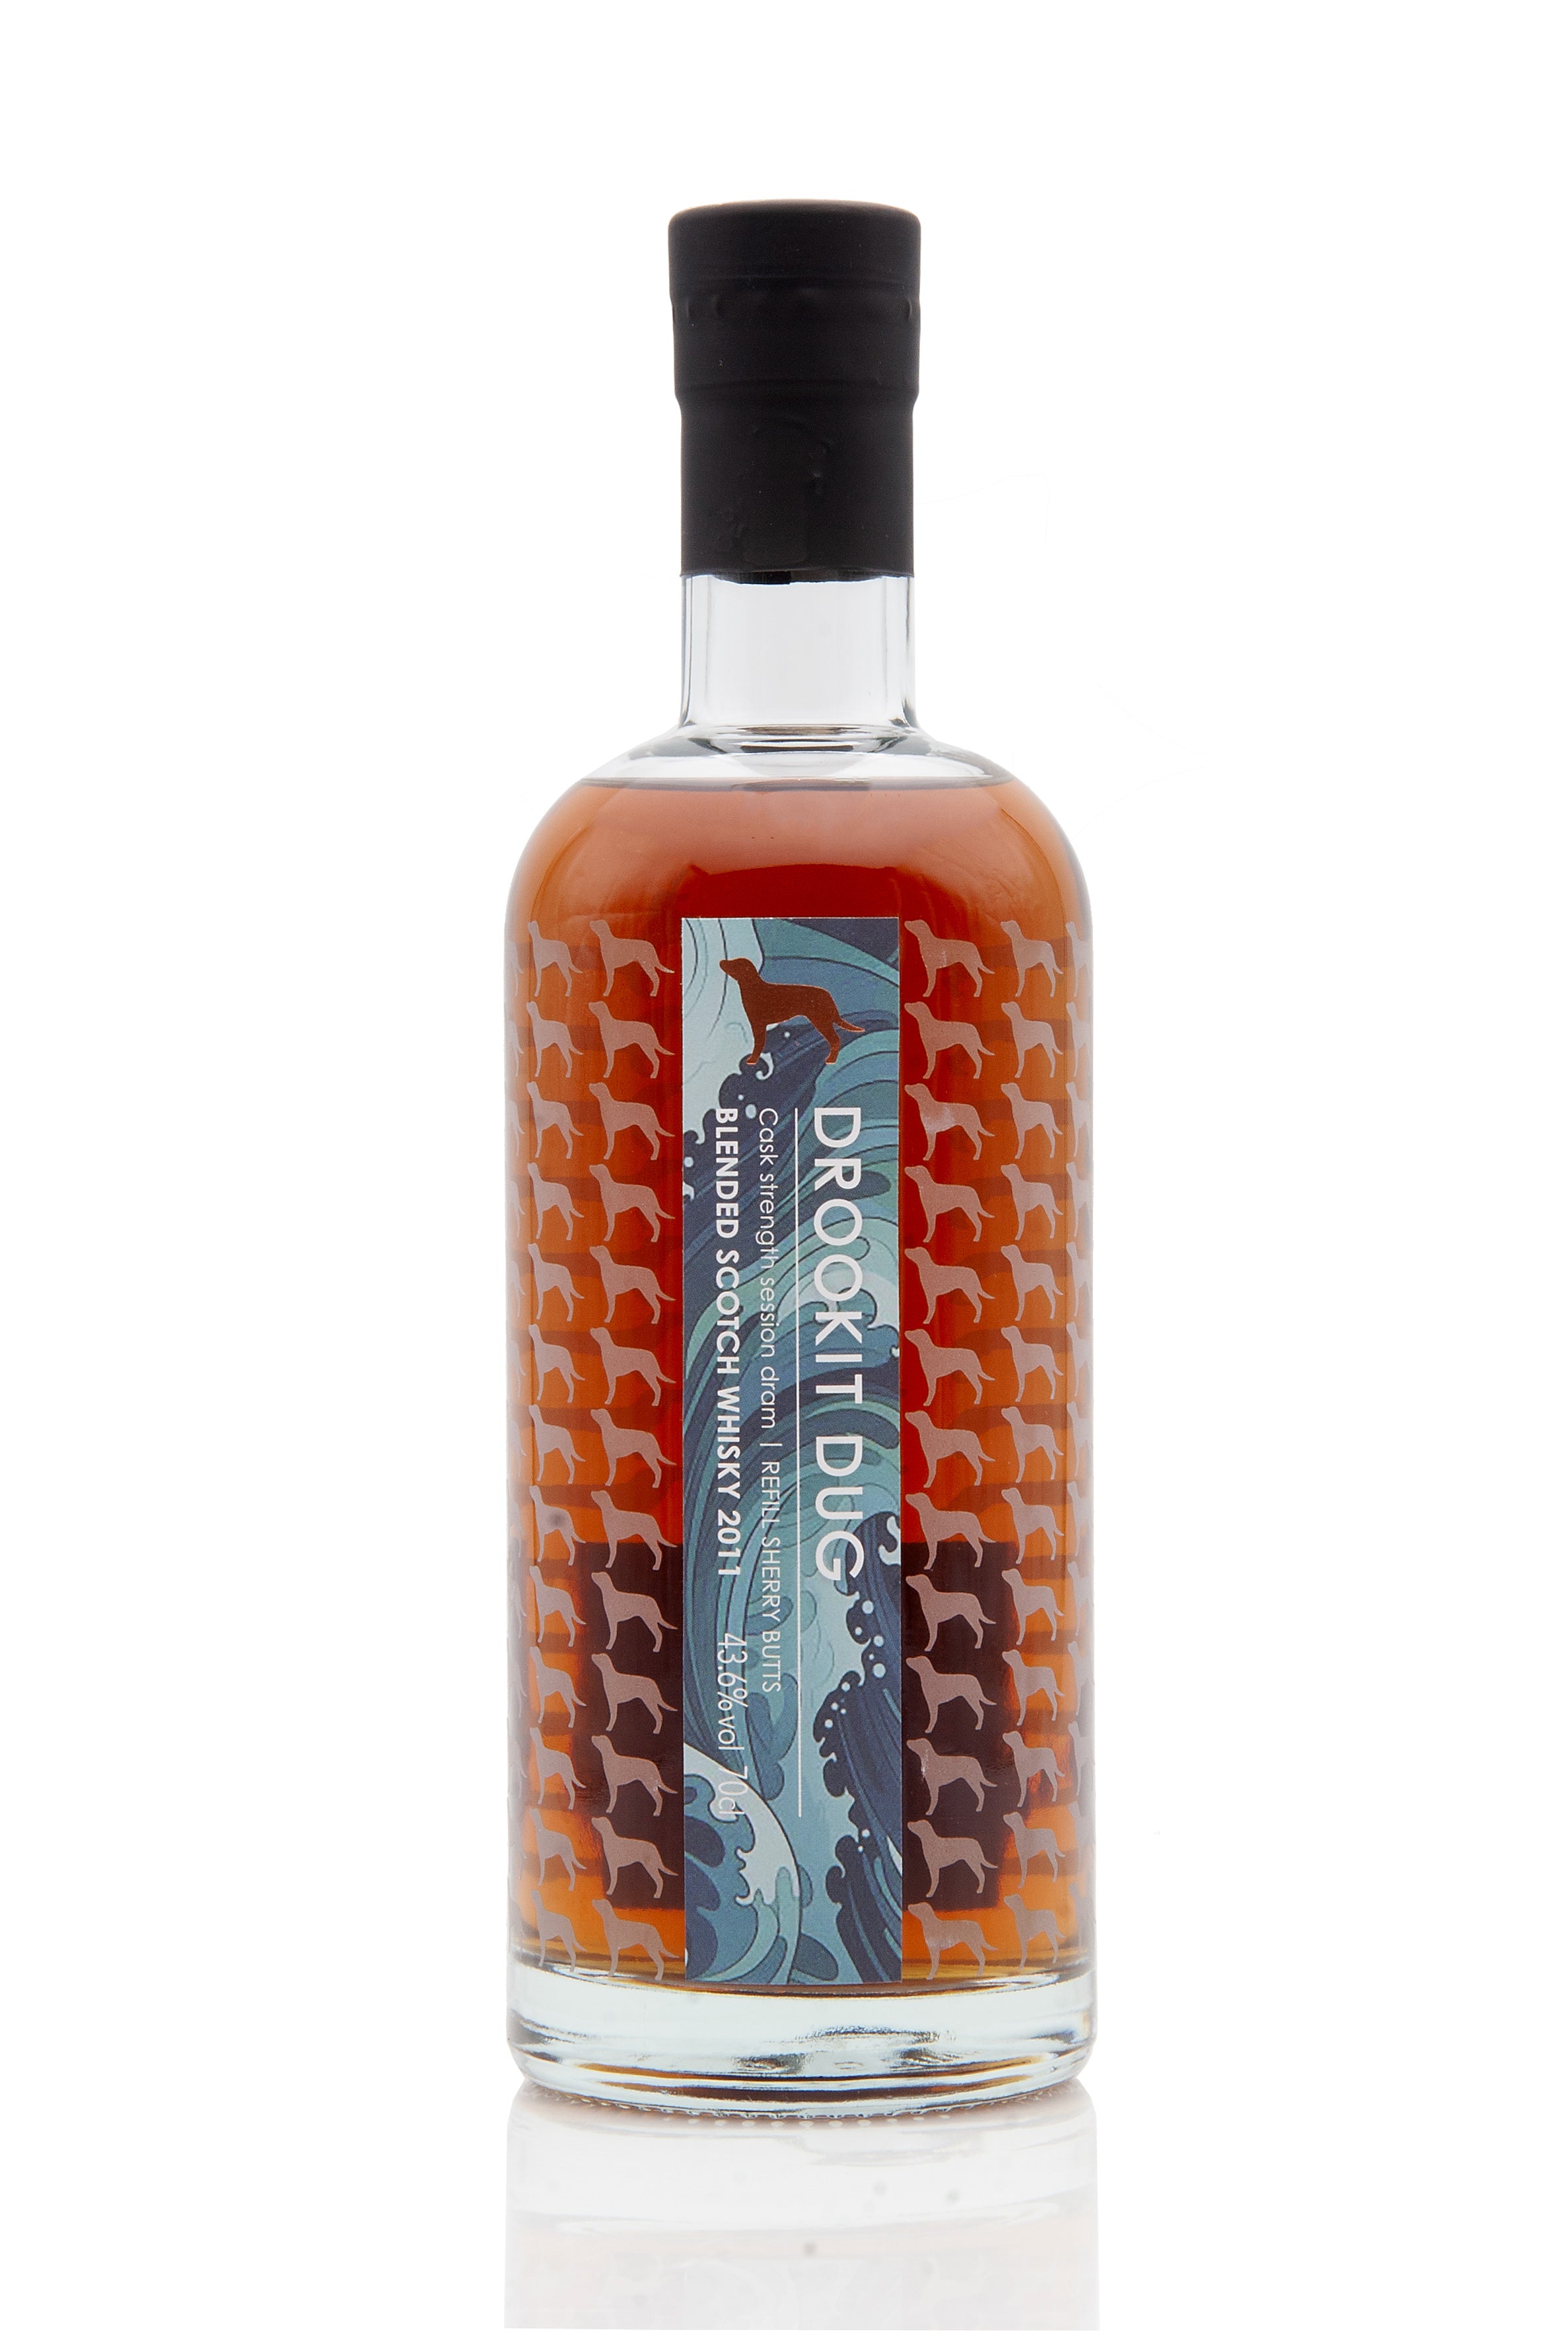 Drookit Dug 2011 Blended Scotch Whisky | Little Brown Dog Spirits